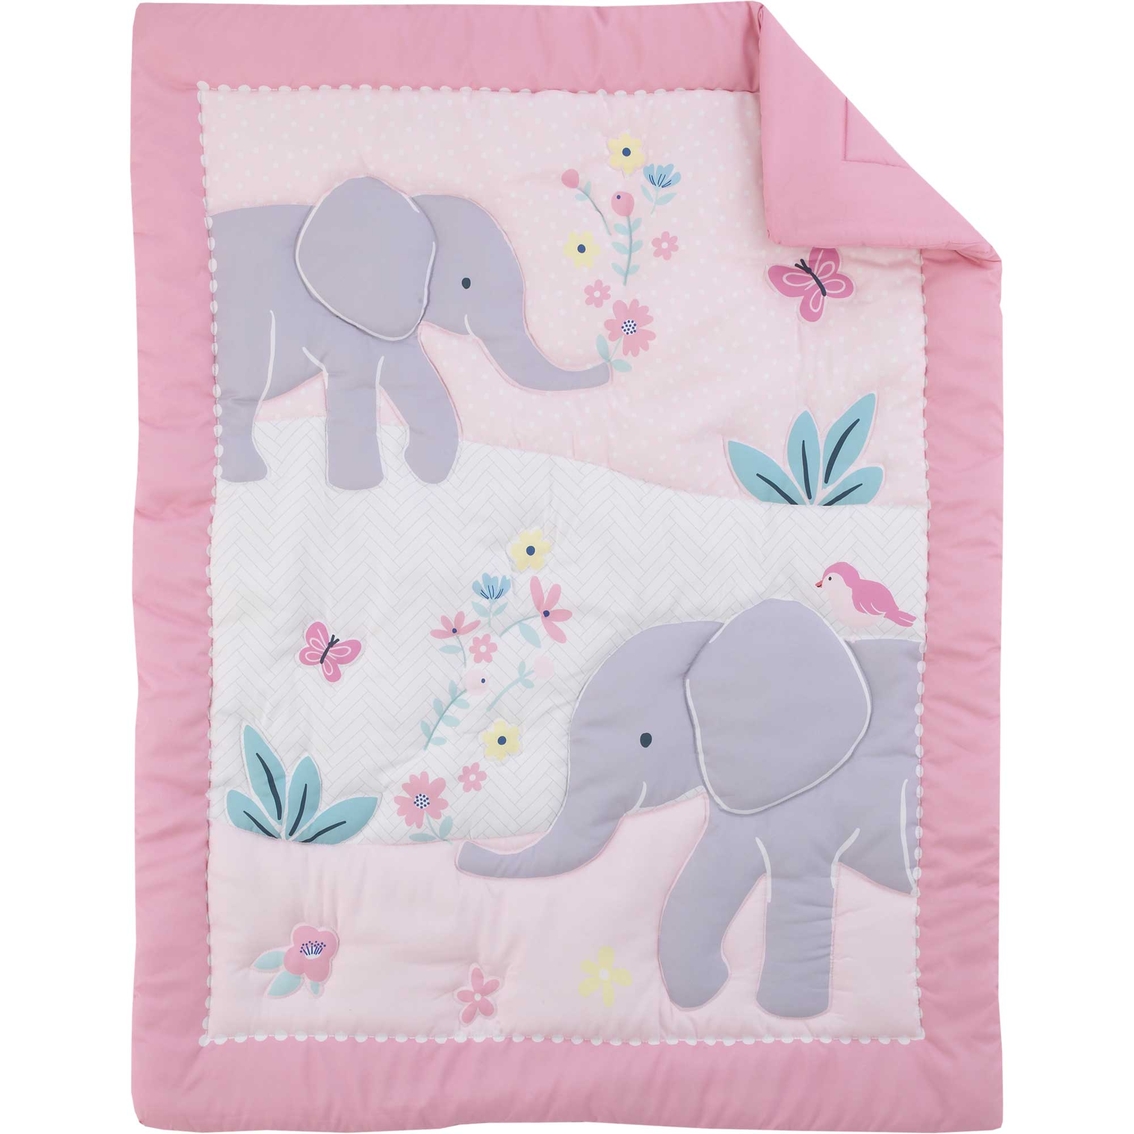 Carter's Floral Elephant 3 pc. Nursery Crib Bedding Set - Image 2 of 7